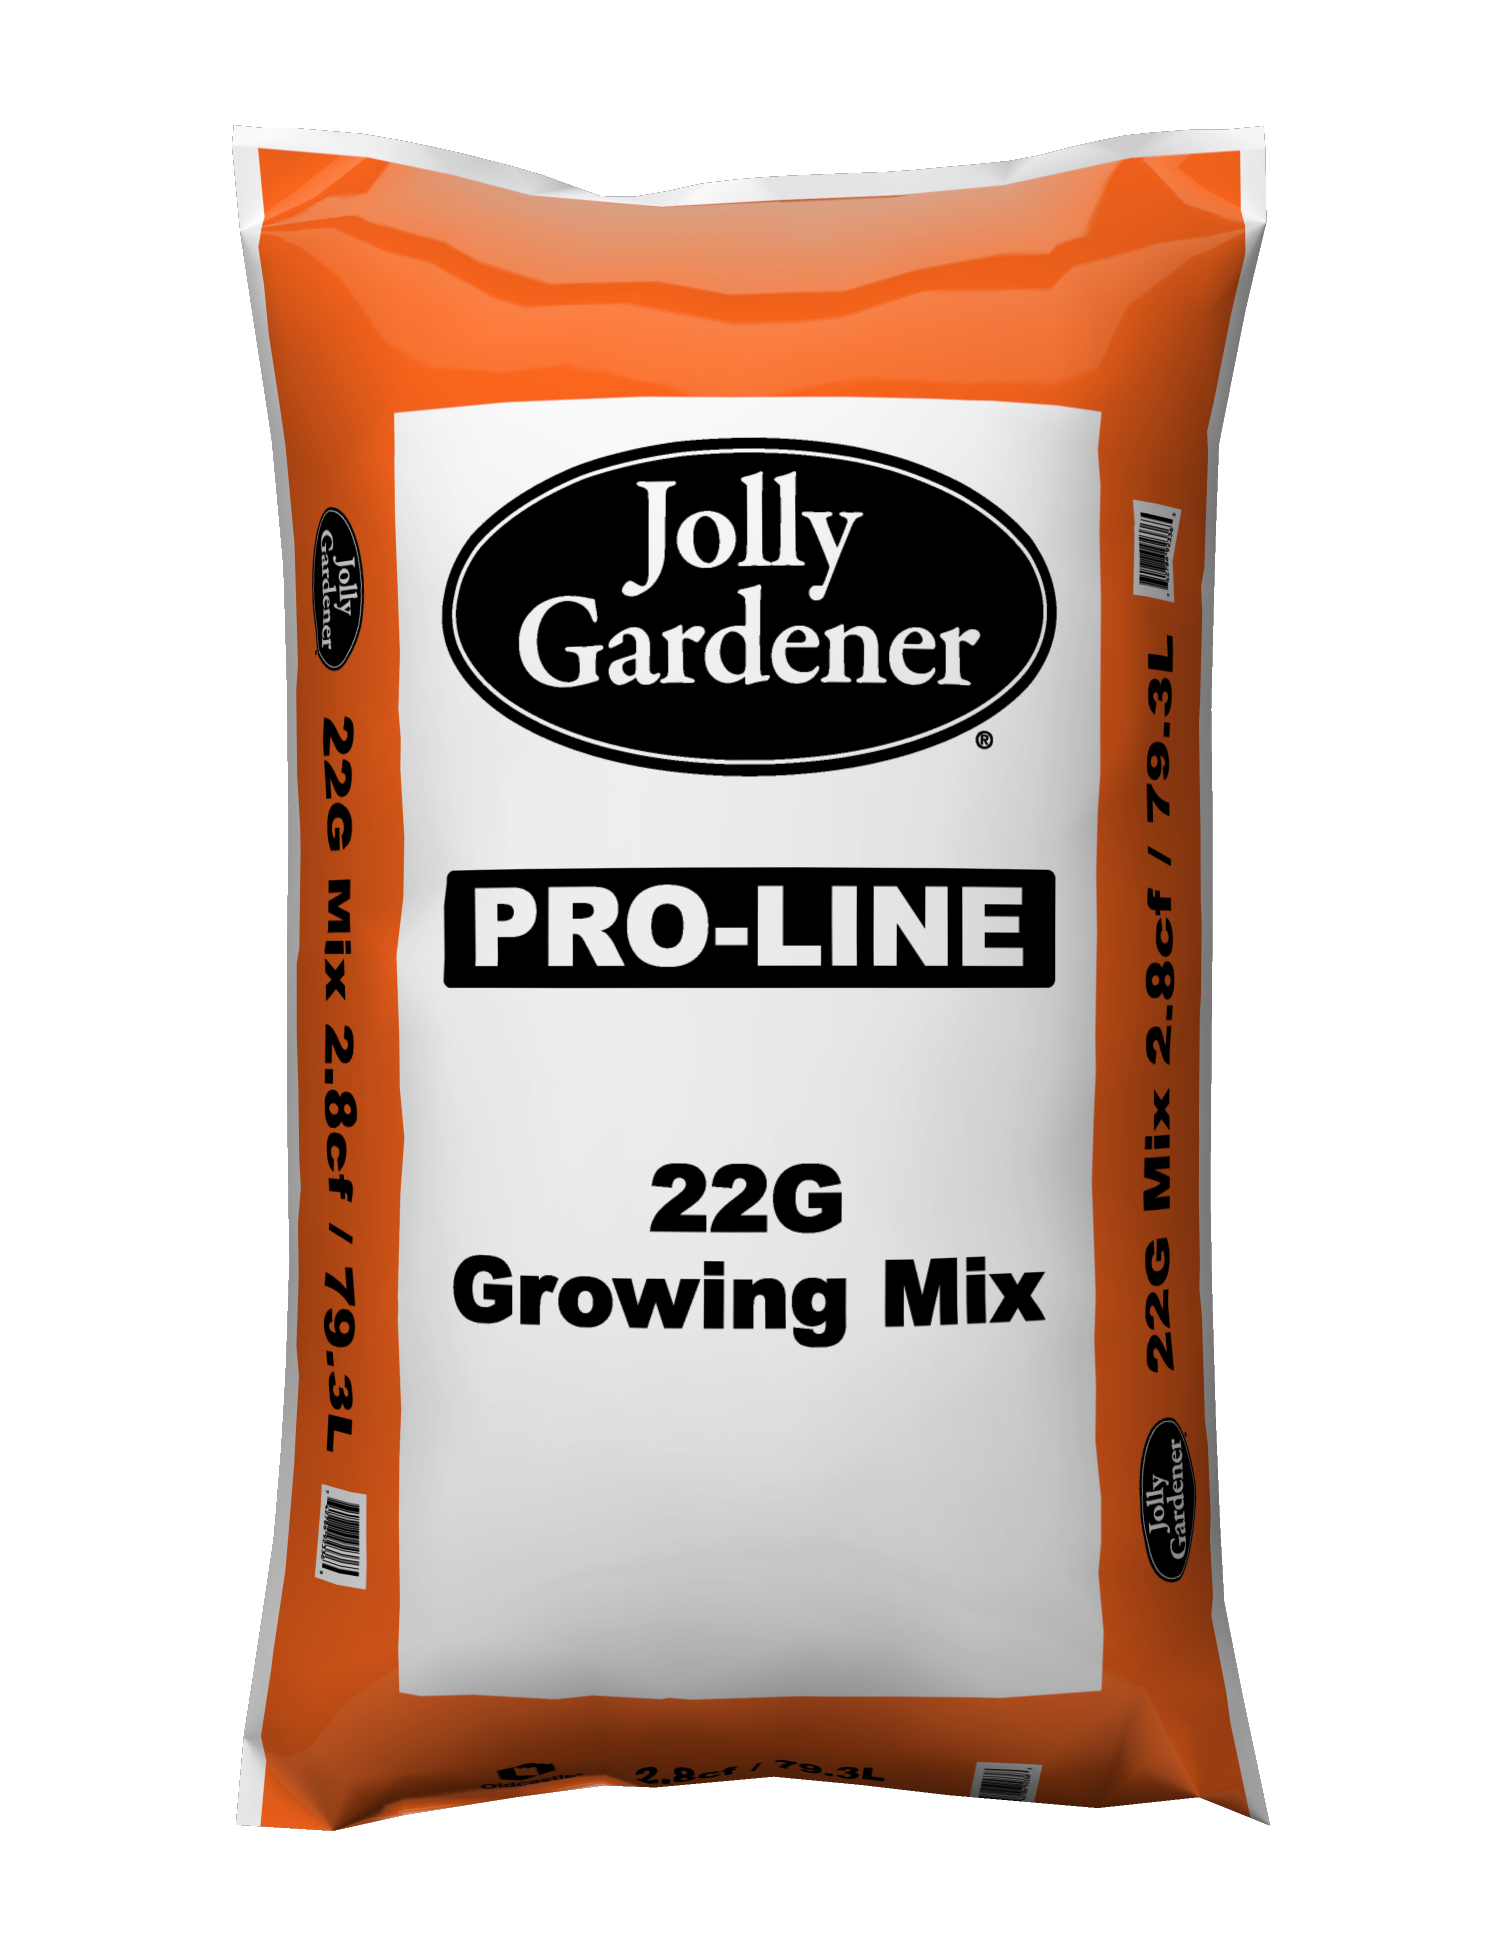 Jolly Gardener Pro Line 22G Mix - 2.8 Cu. Ft. bag - Soilless Growing Media